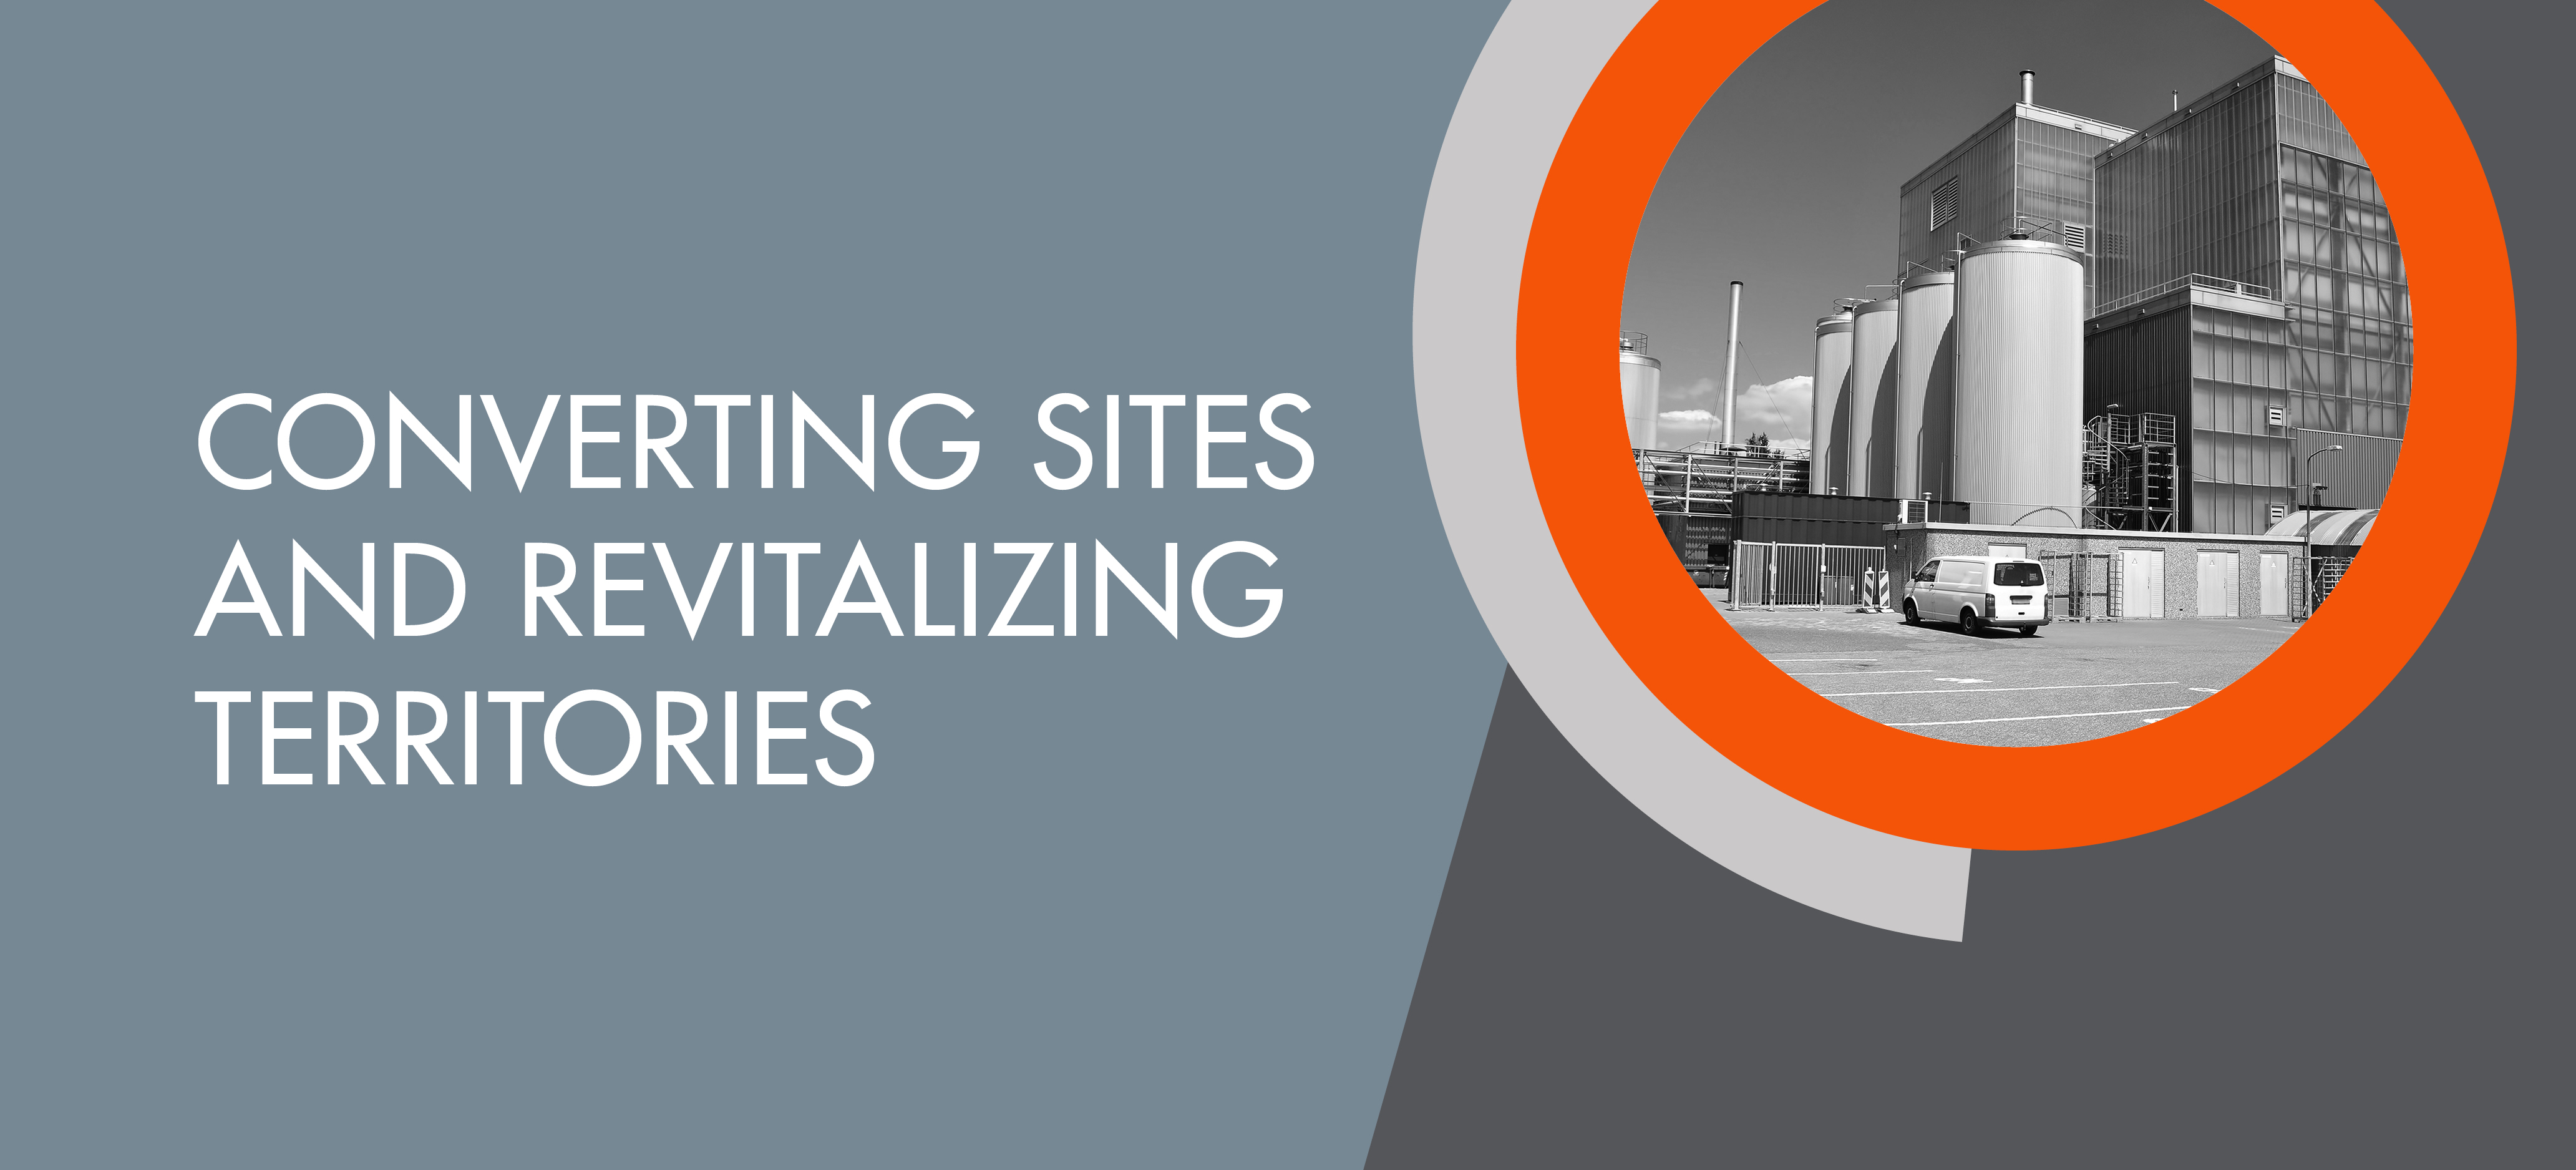 Converting sites and revitalizing territories